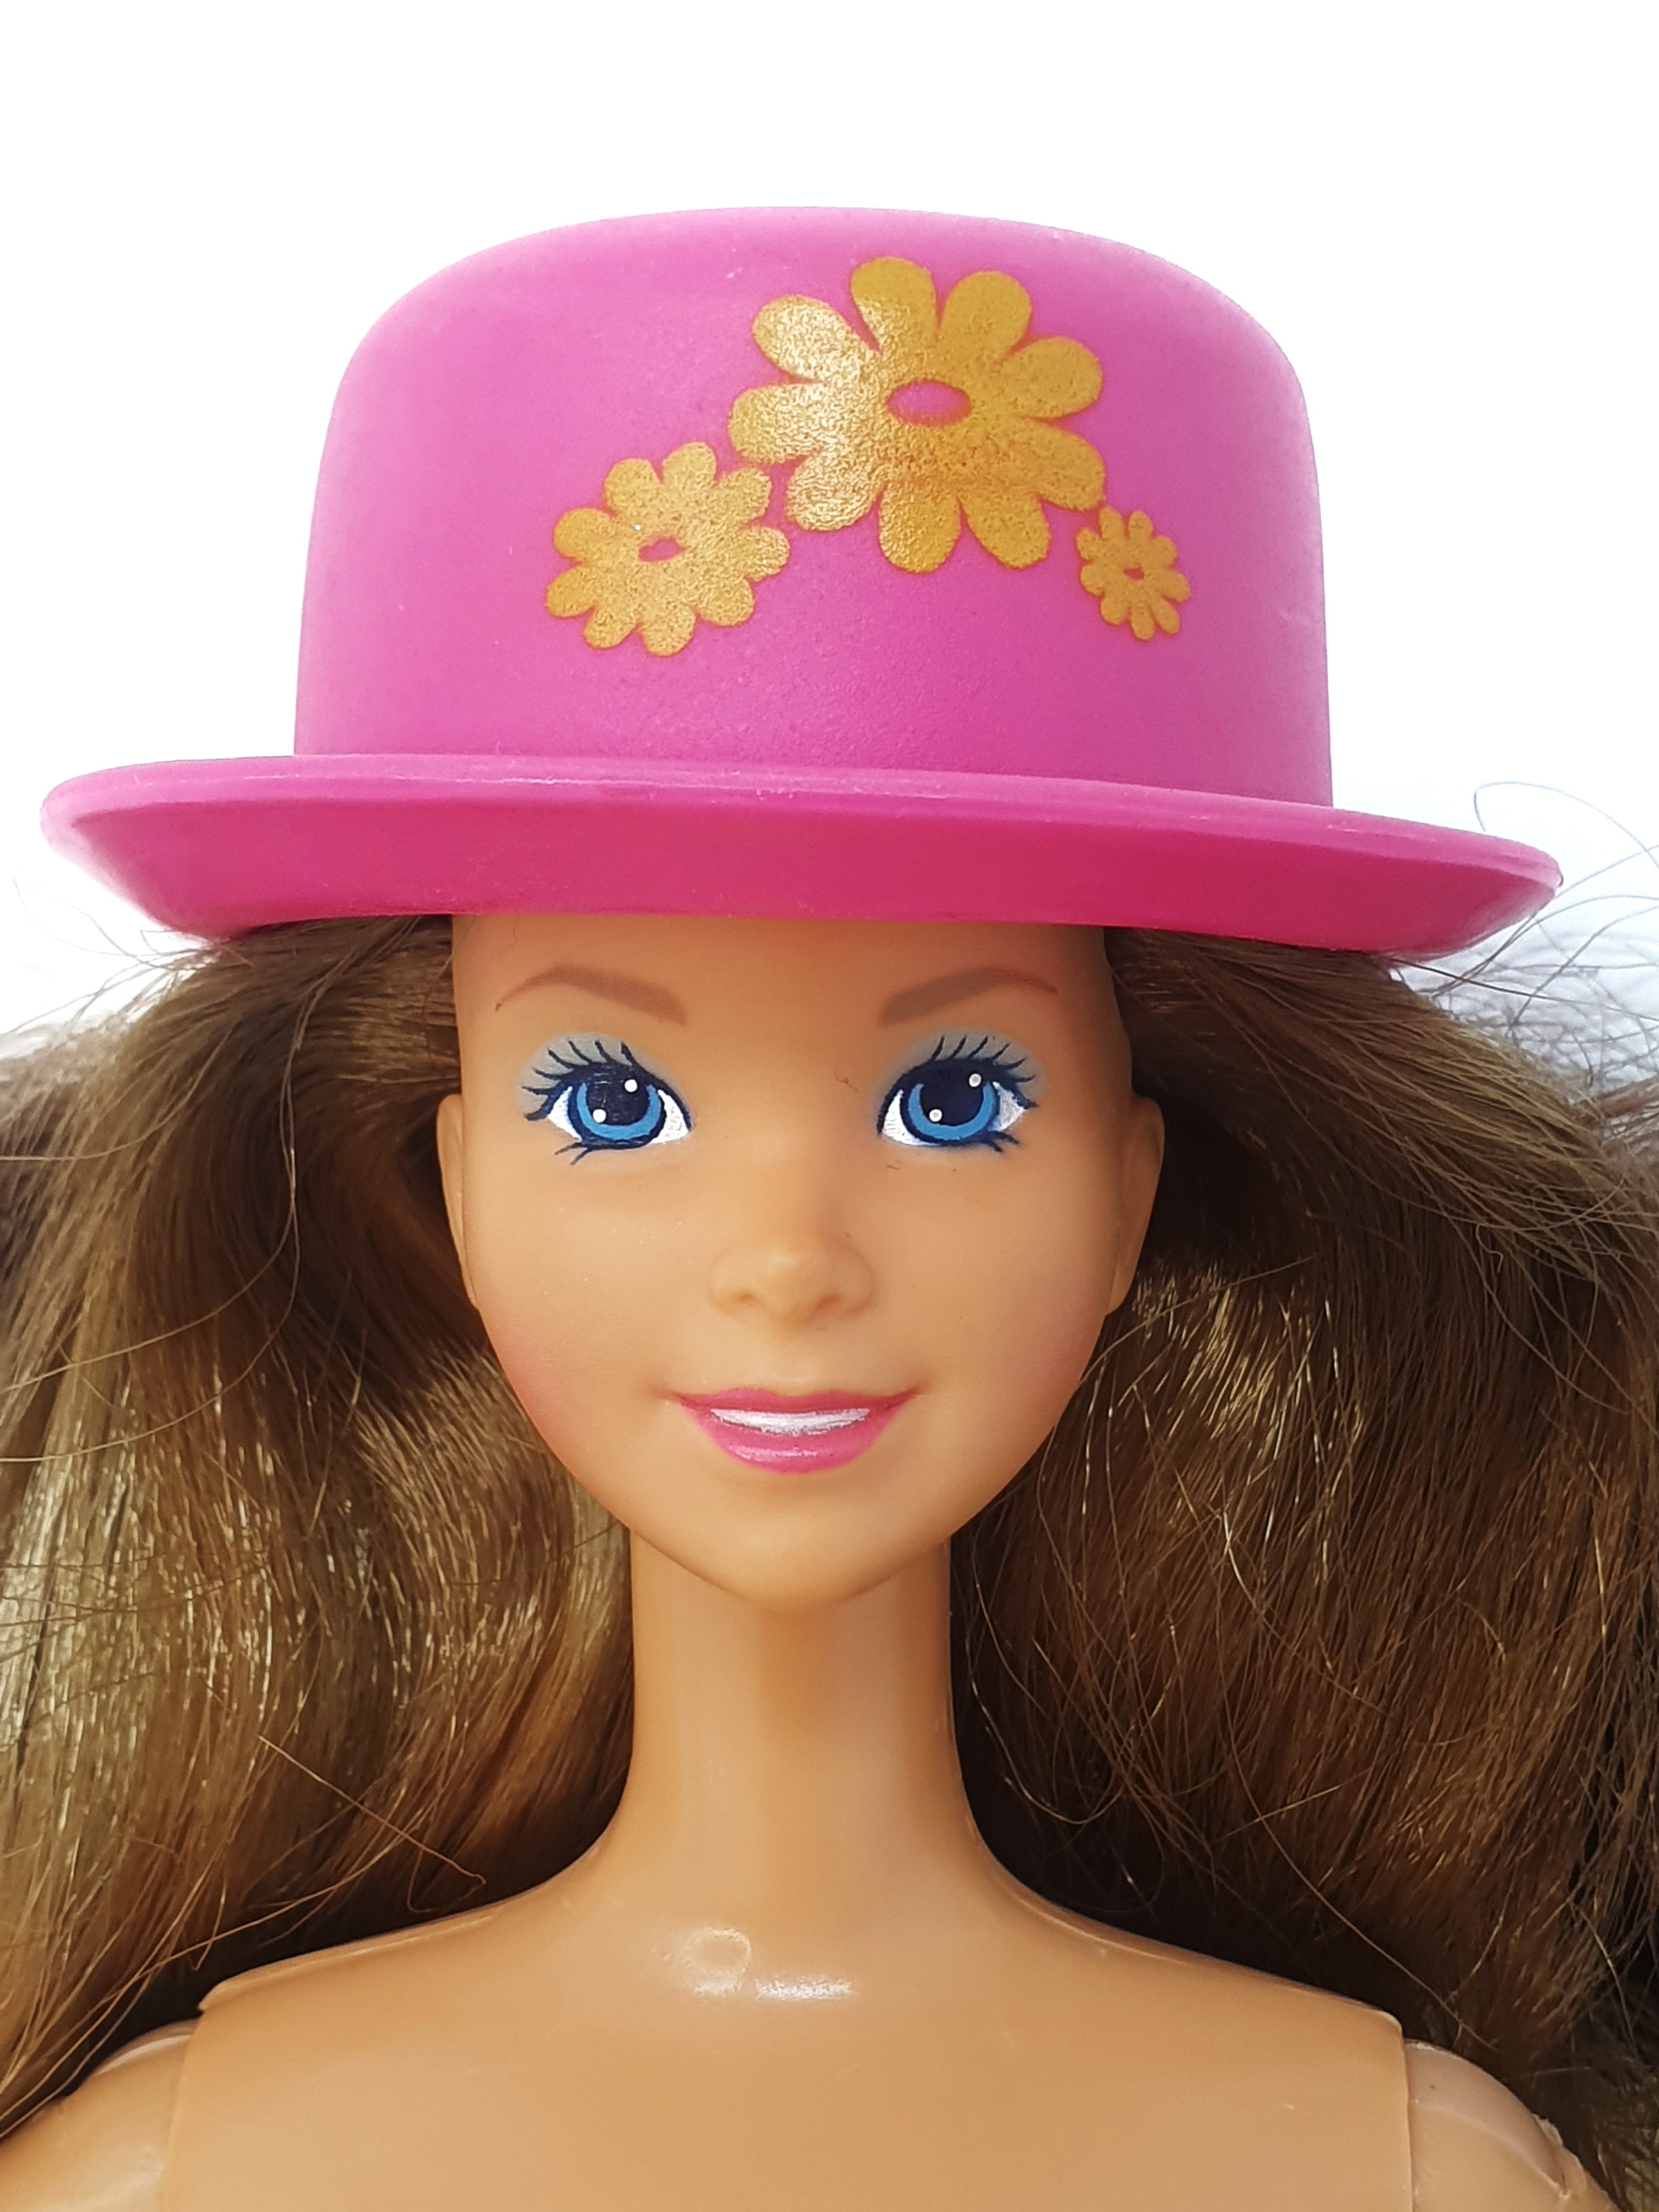 Magic Change Hair Barbie doll hat, 1993 Mattel